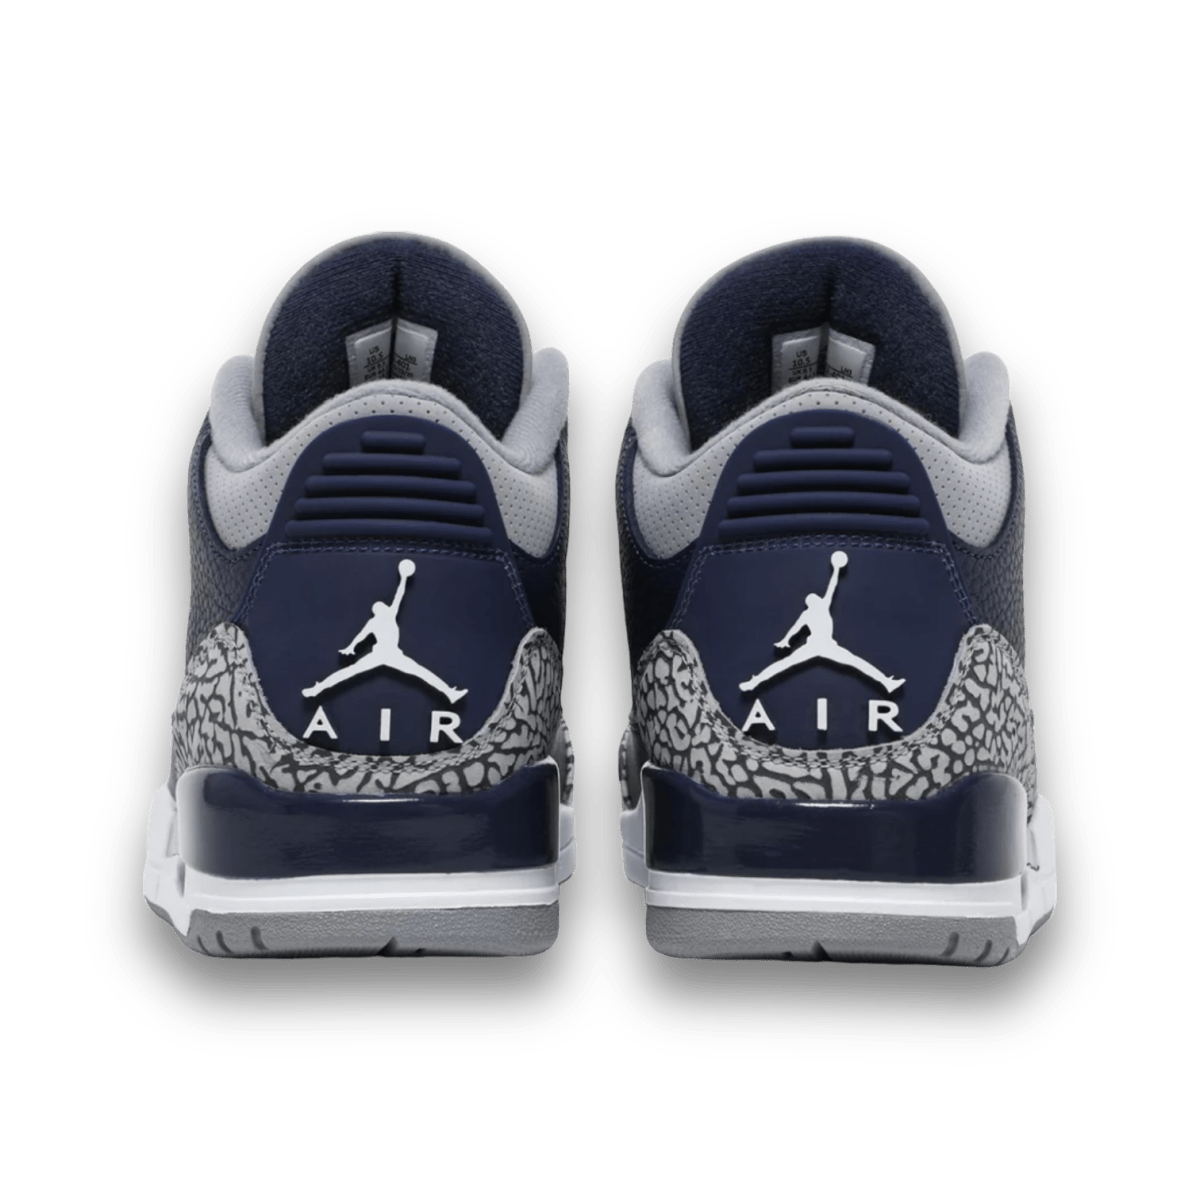 Laces for Lions Air Jordan 3 Retro Navy & Silver - Mid Sneaker - Jawns on Fire Sneakers & Streetwear